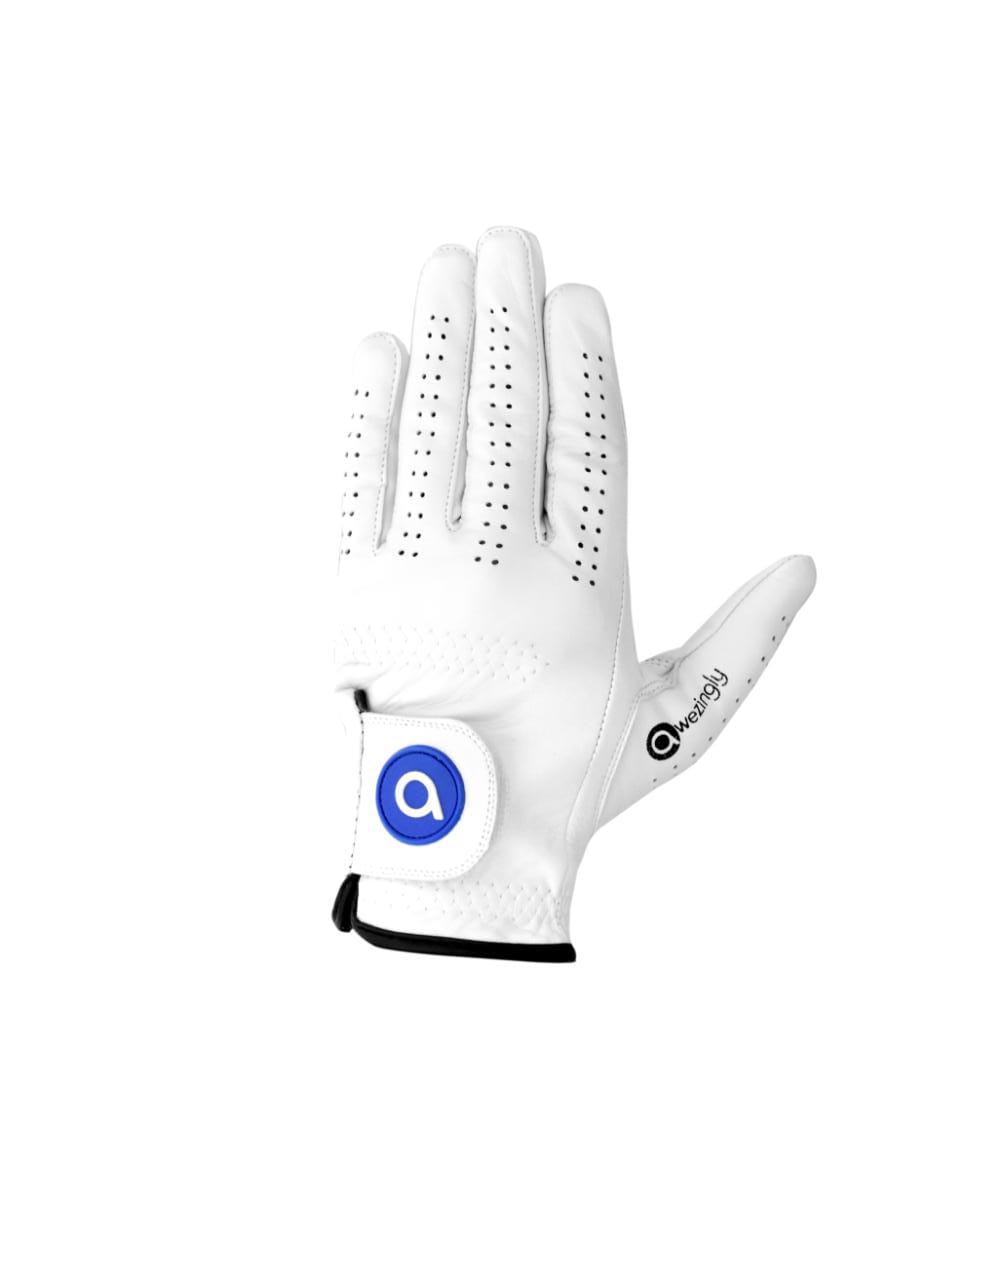 Awezingly Premium Quality Cabretta Leather Golf Glove for Men - White (S)